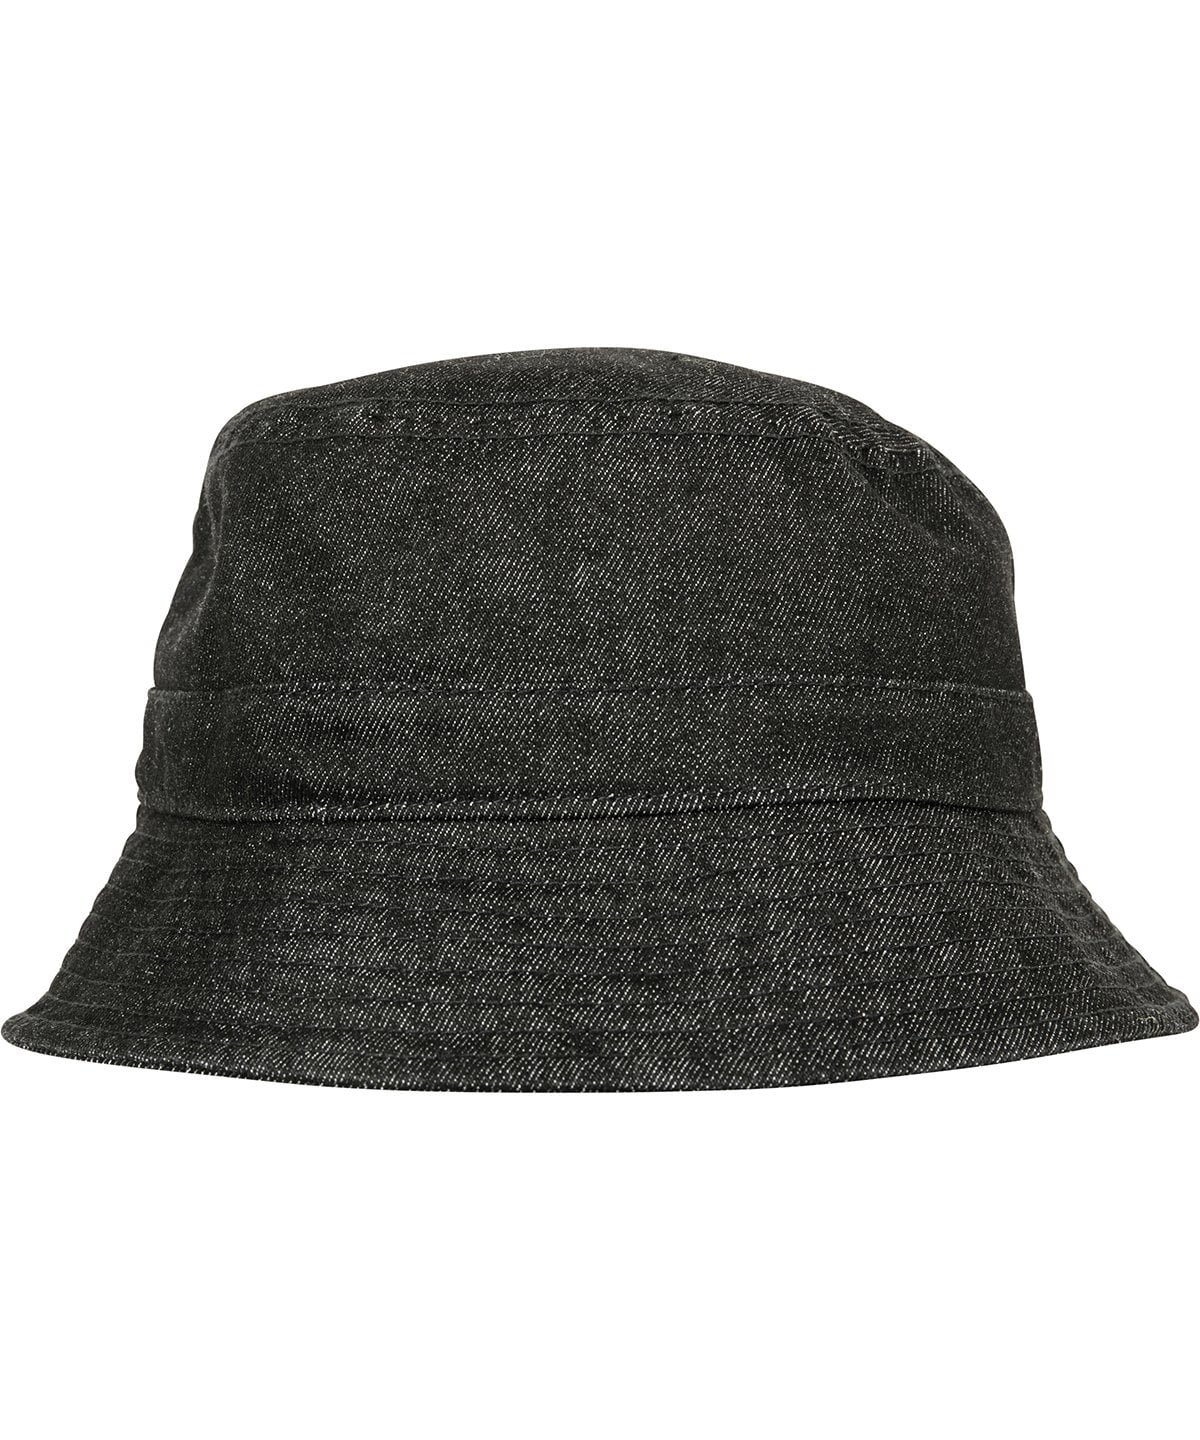 Denim bucket hat | Huk Group Nuneaton